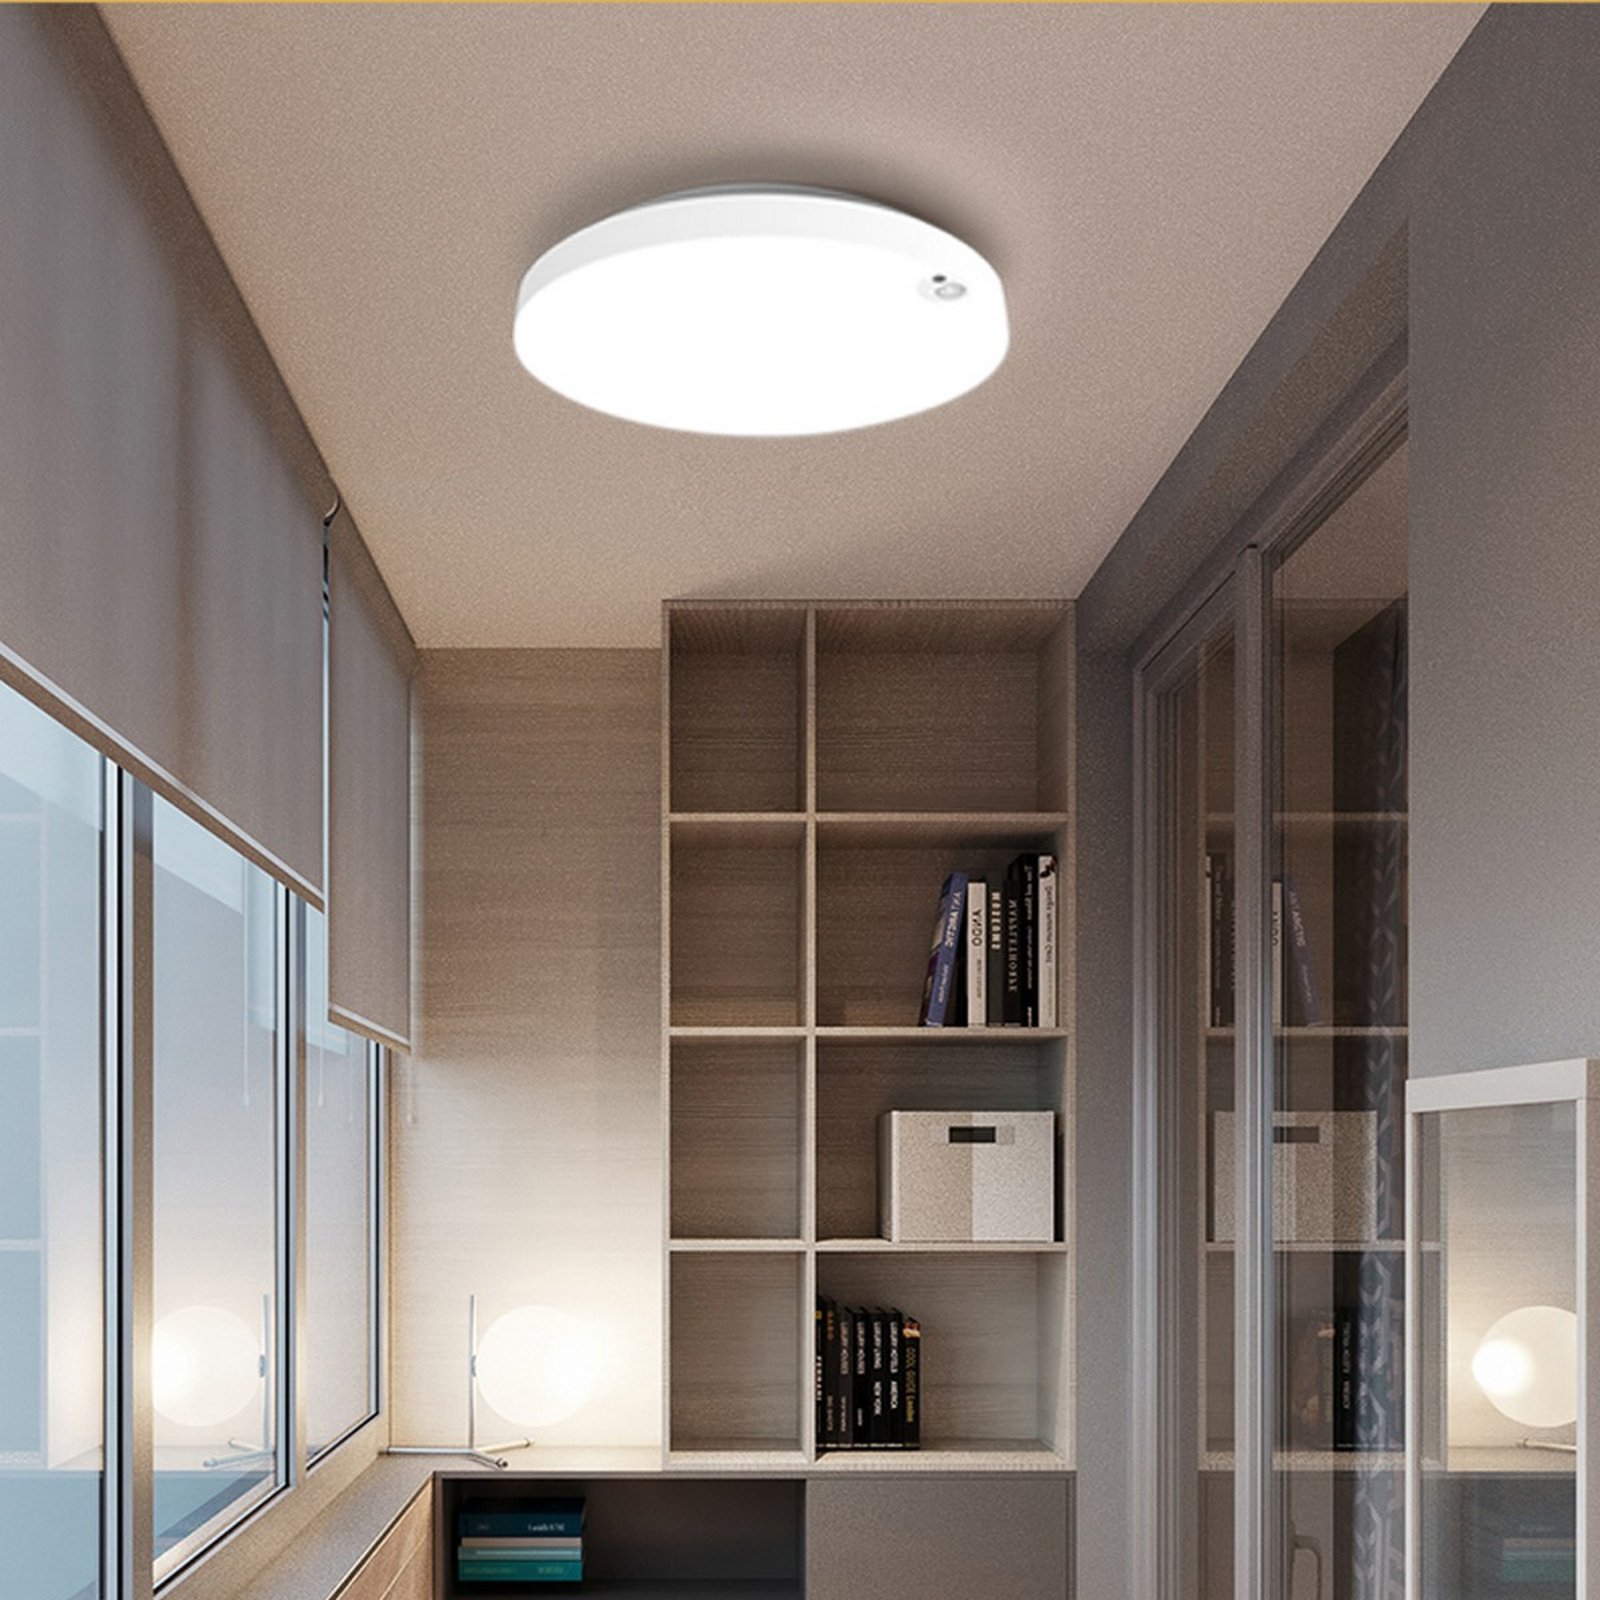 LED ceiling lamp Allrounder 1, adjustable light colour, sensor